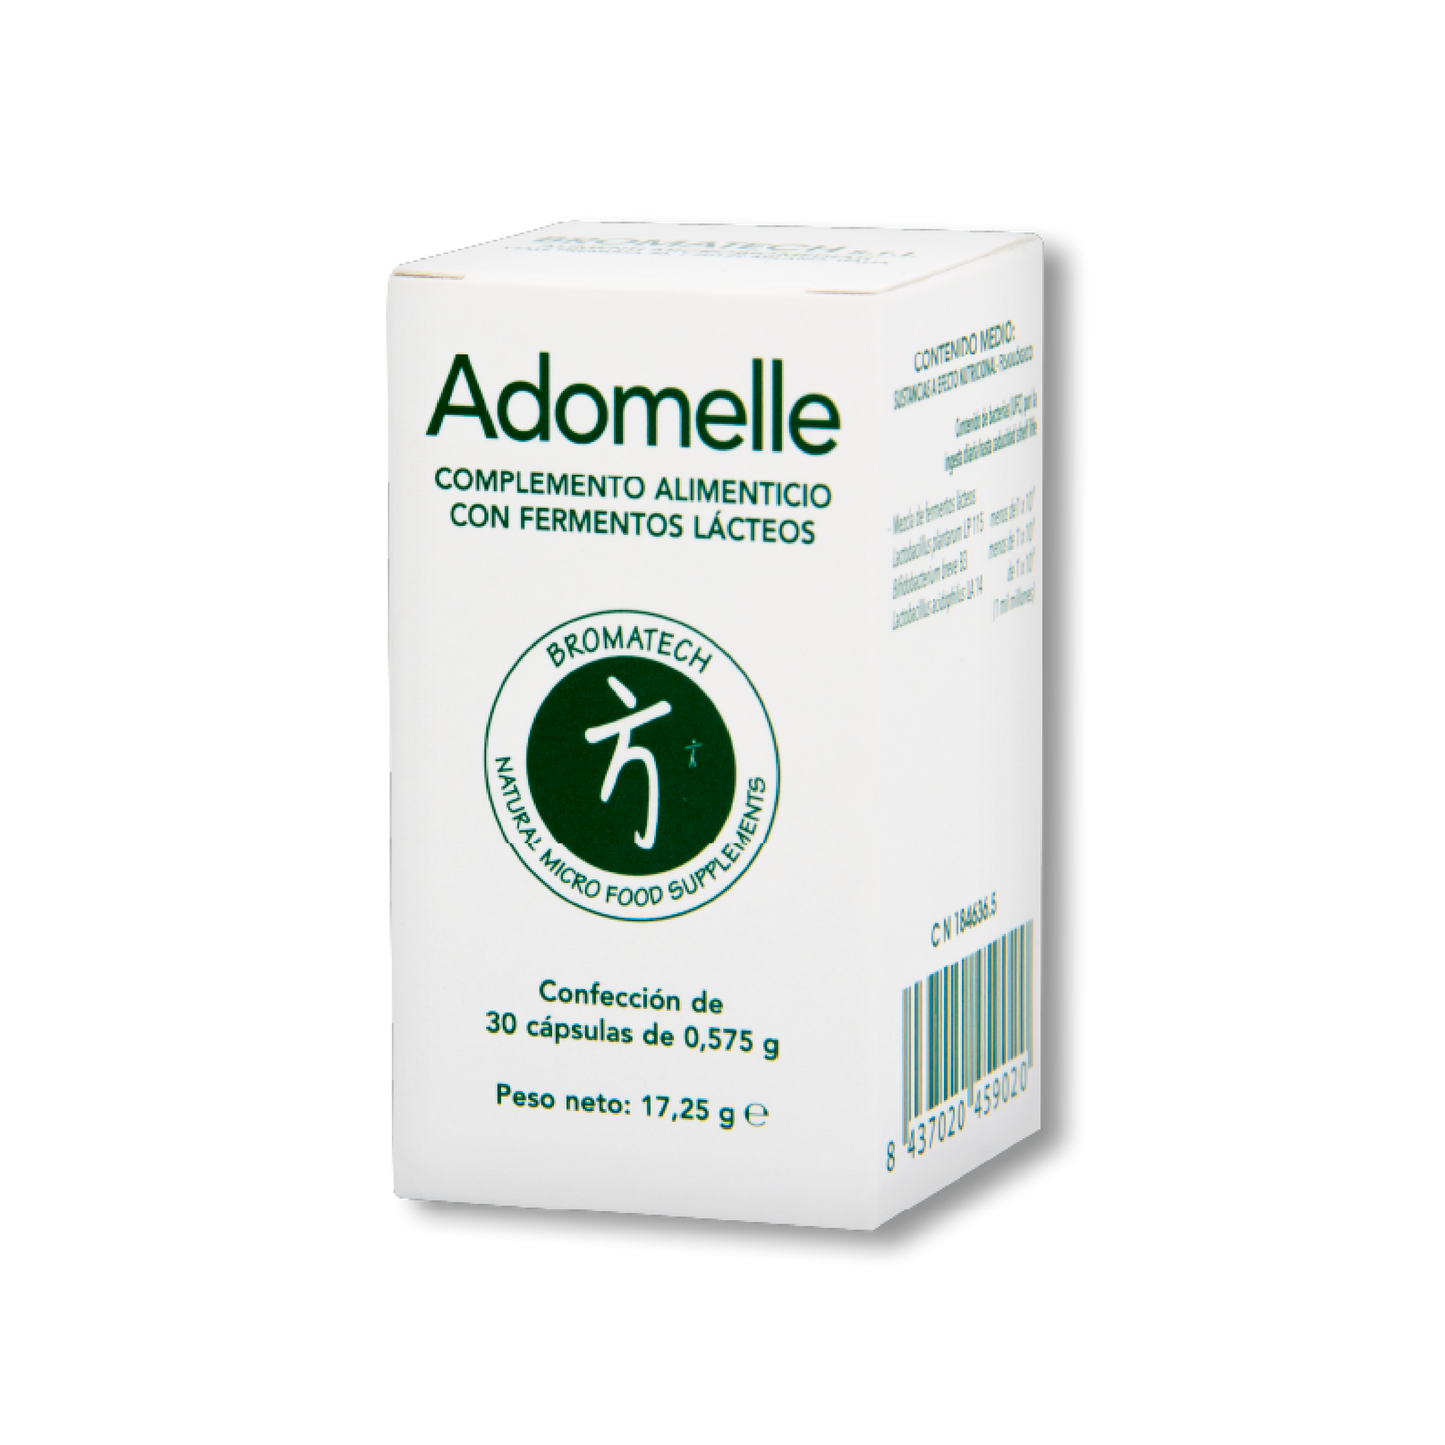 Adomelle 30 cápsulas | Bromatech - Dietetica Ferrer